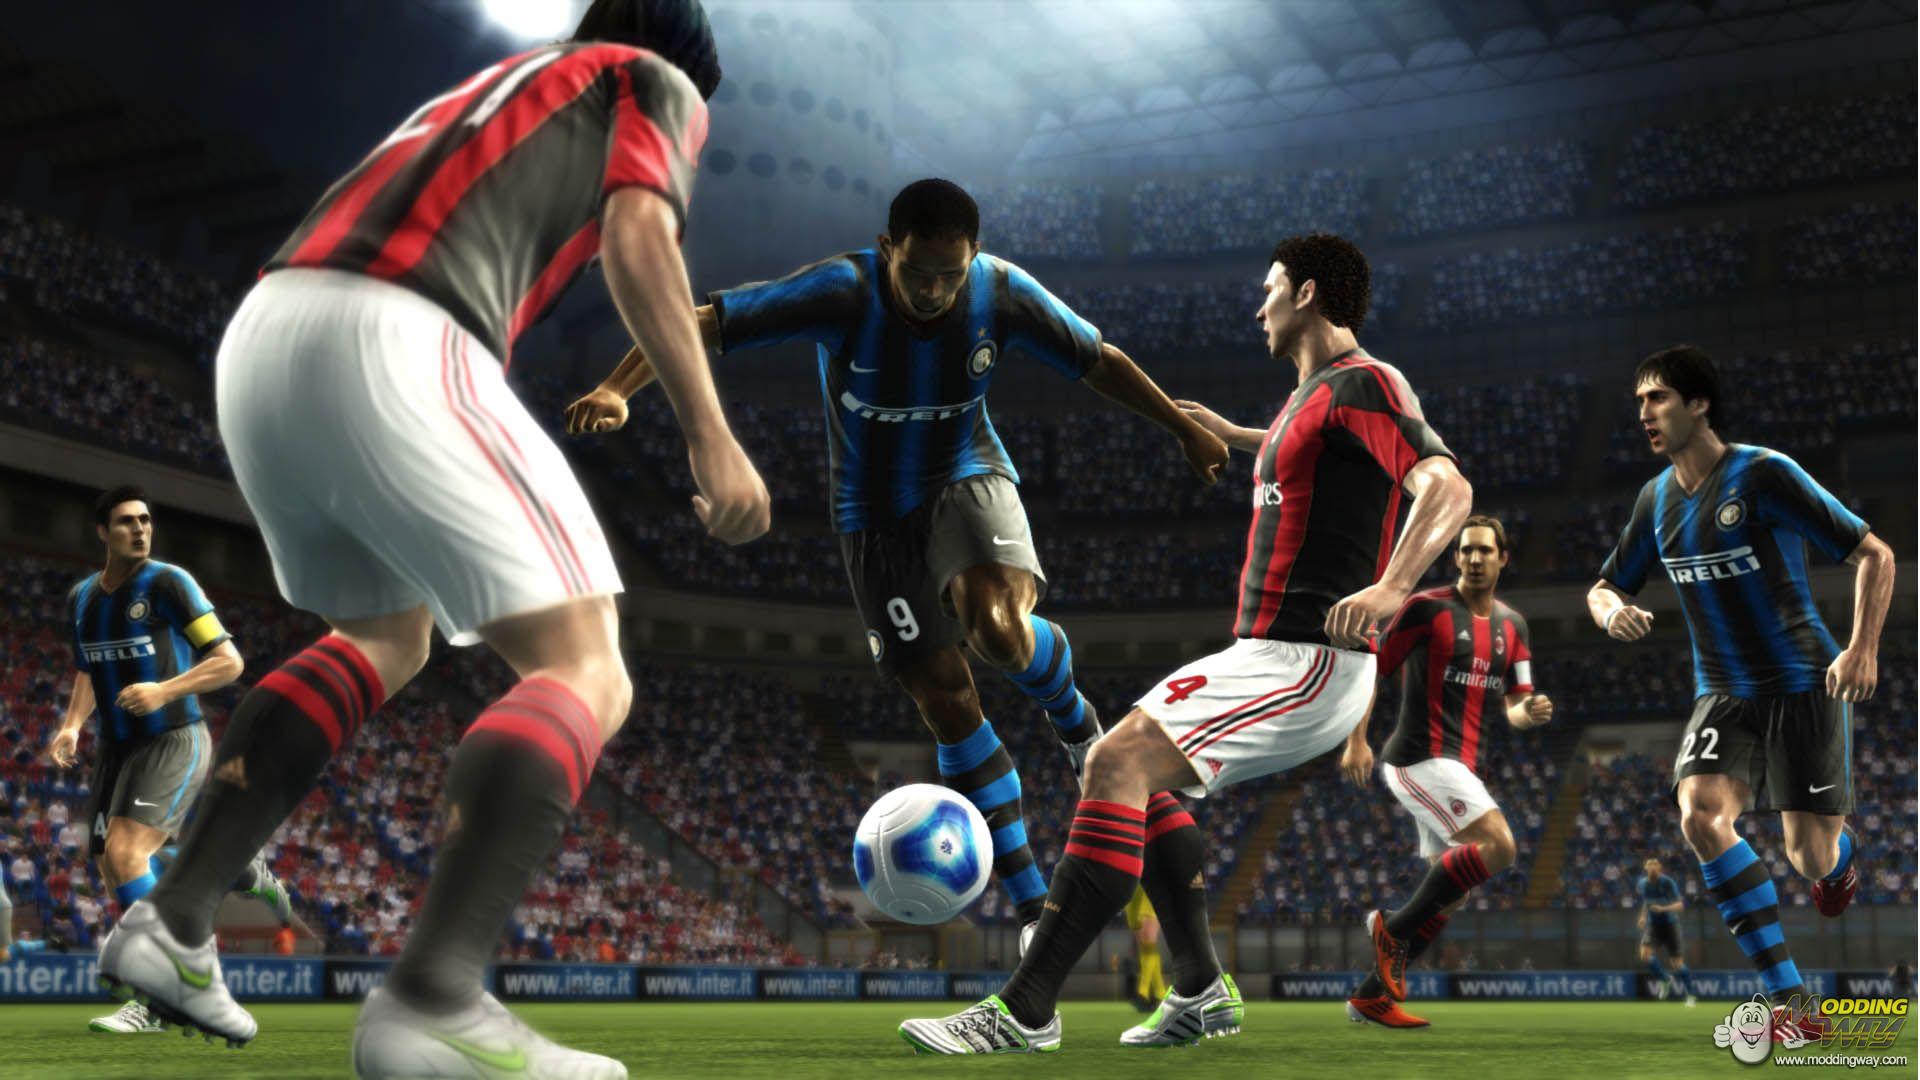 PES 2012  E3 trailer (2011) Pro Evolution Soccer Konami 